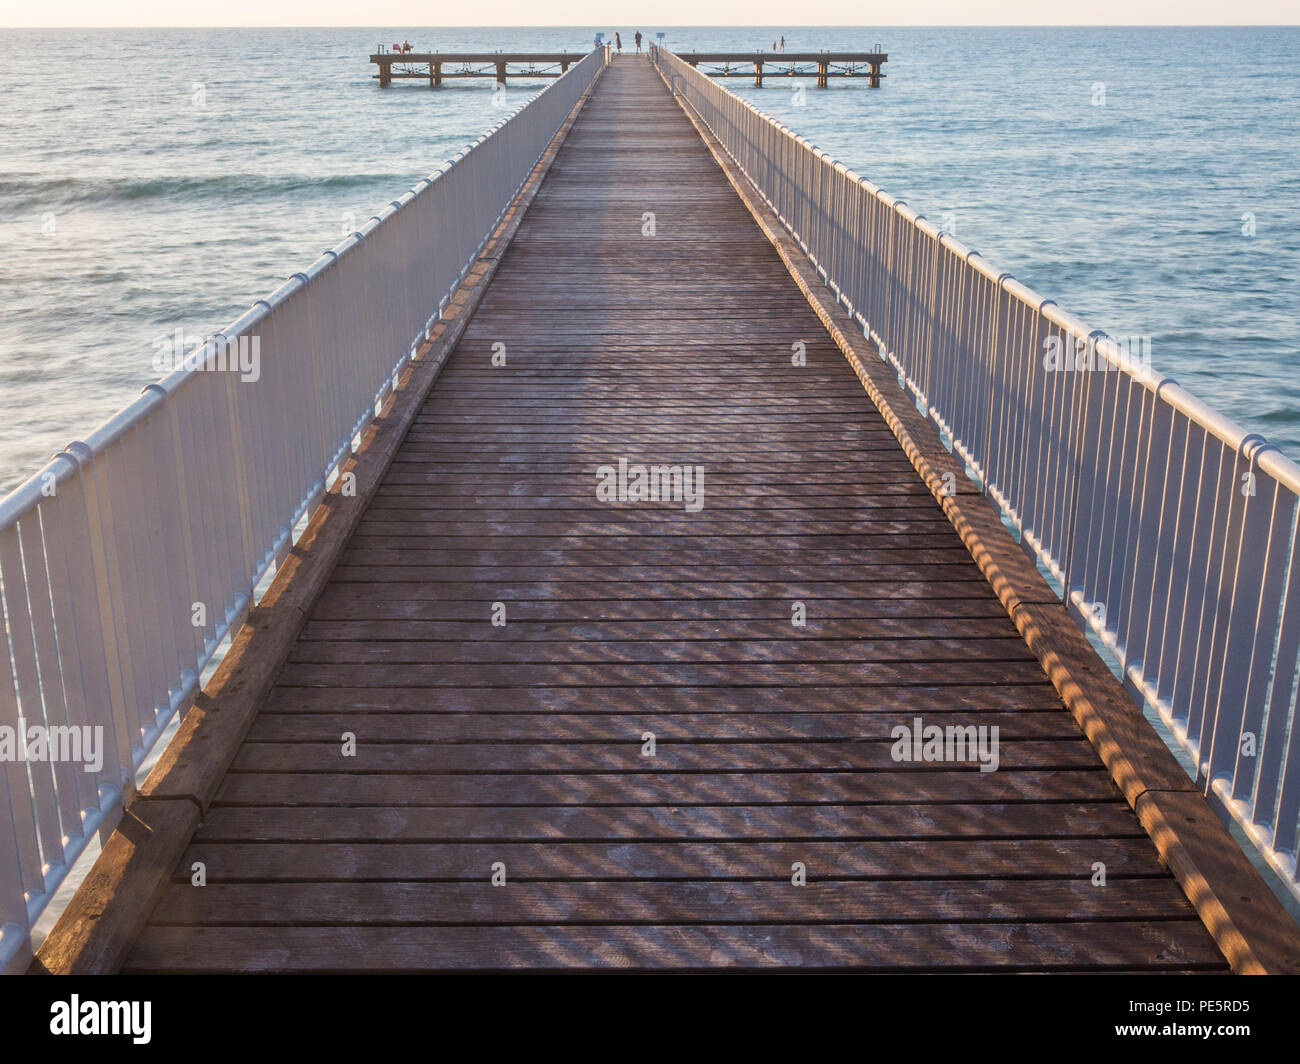 A long pier on the Mediterranean coast near the town of Polis Stock Photo